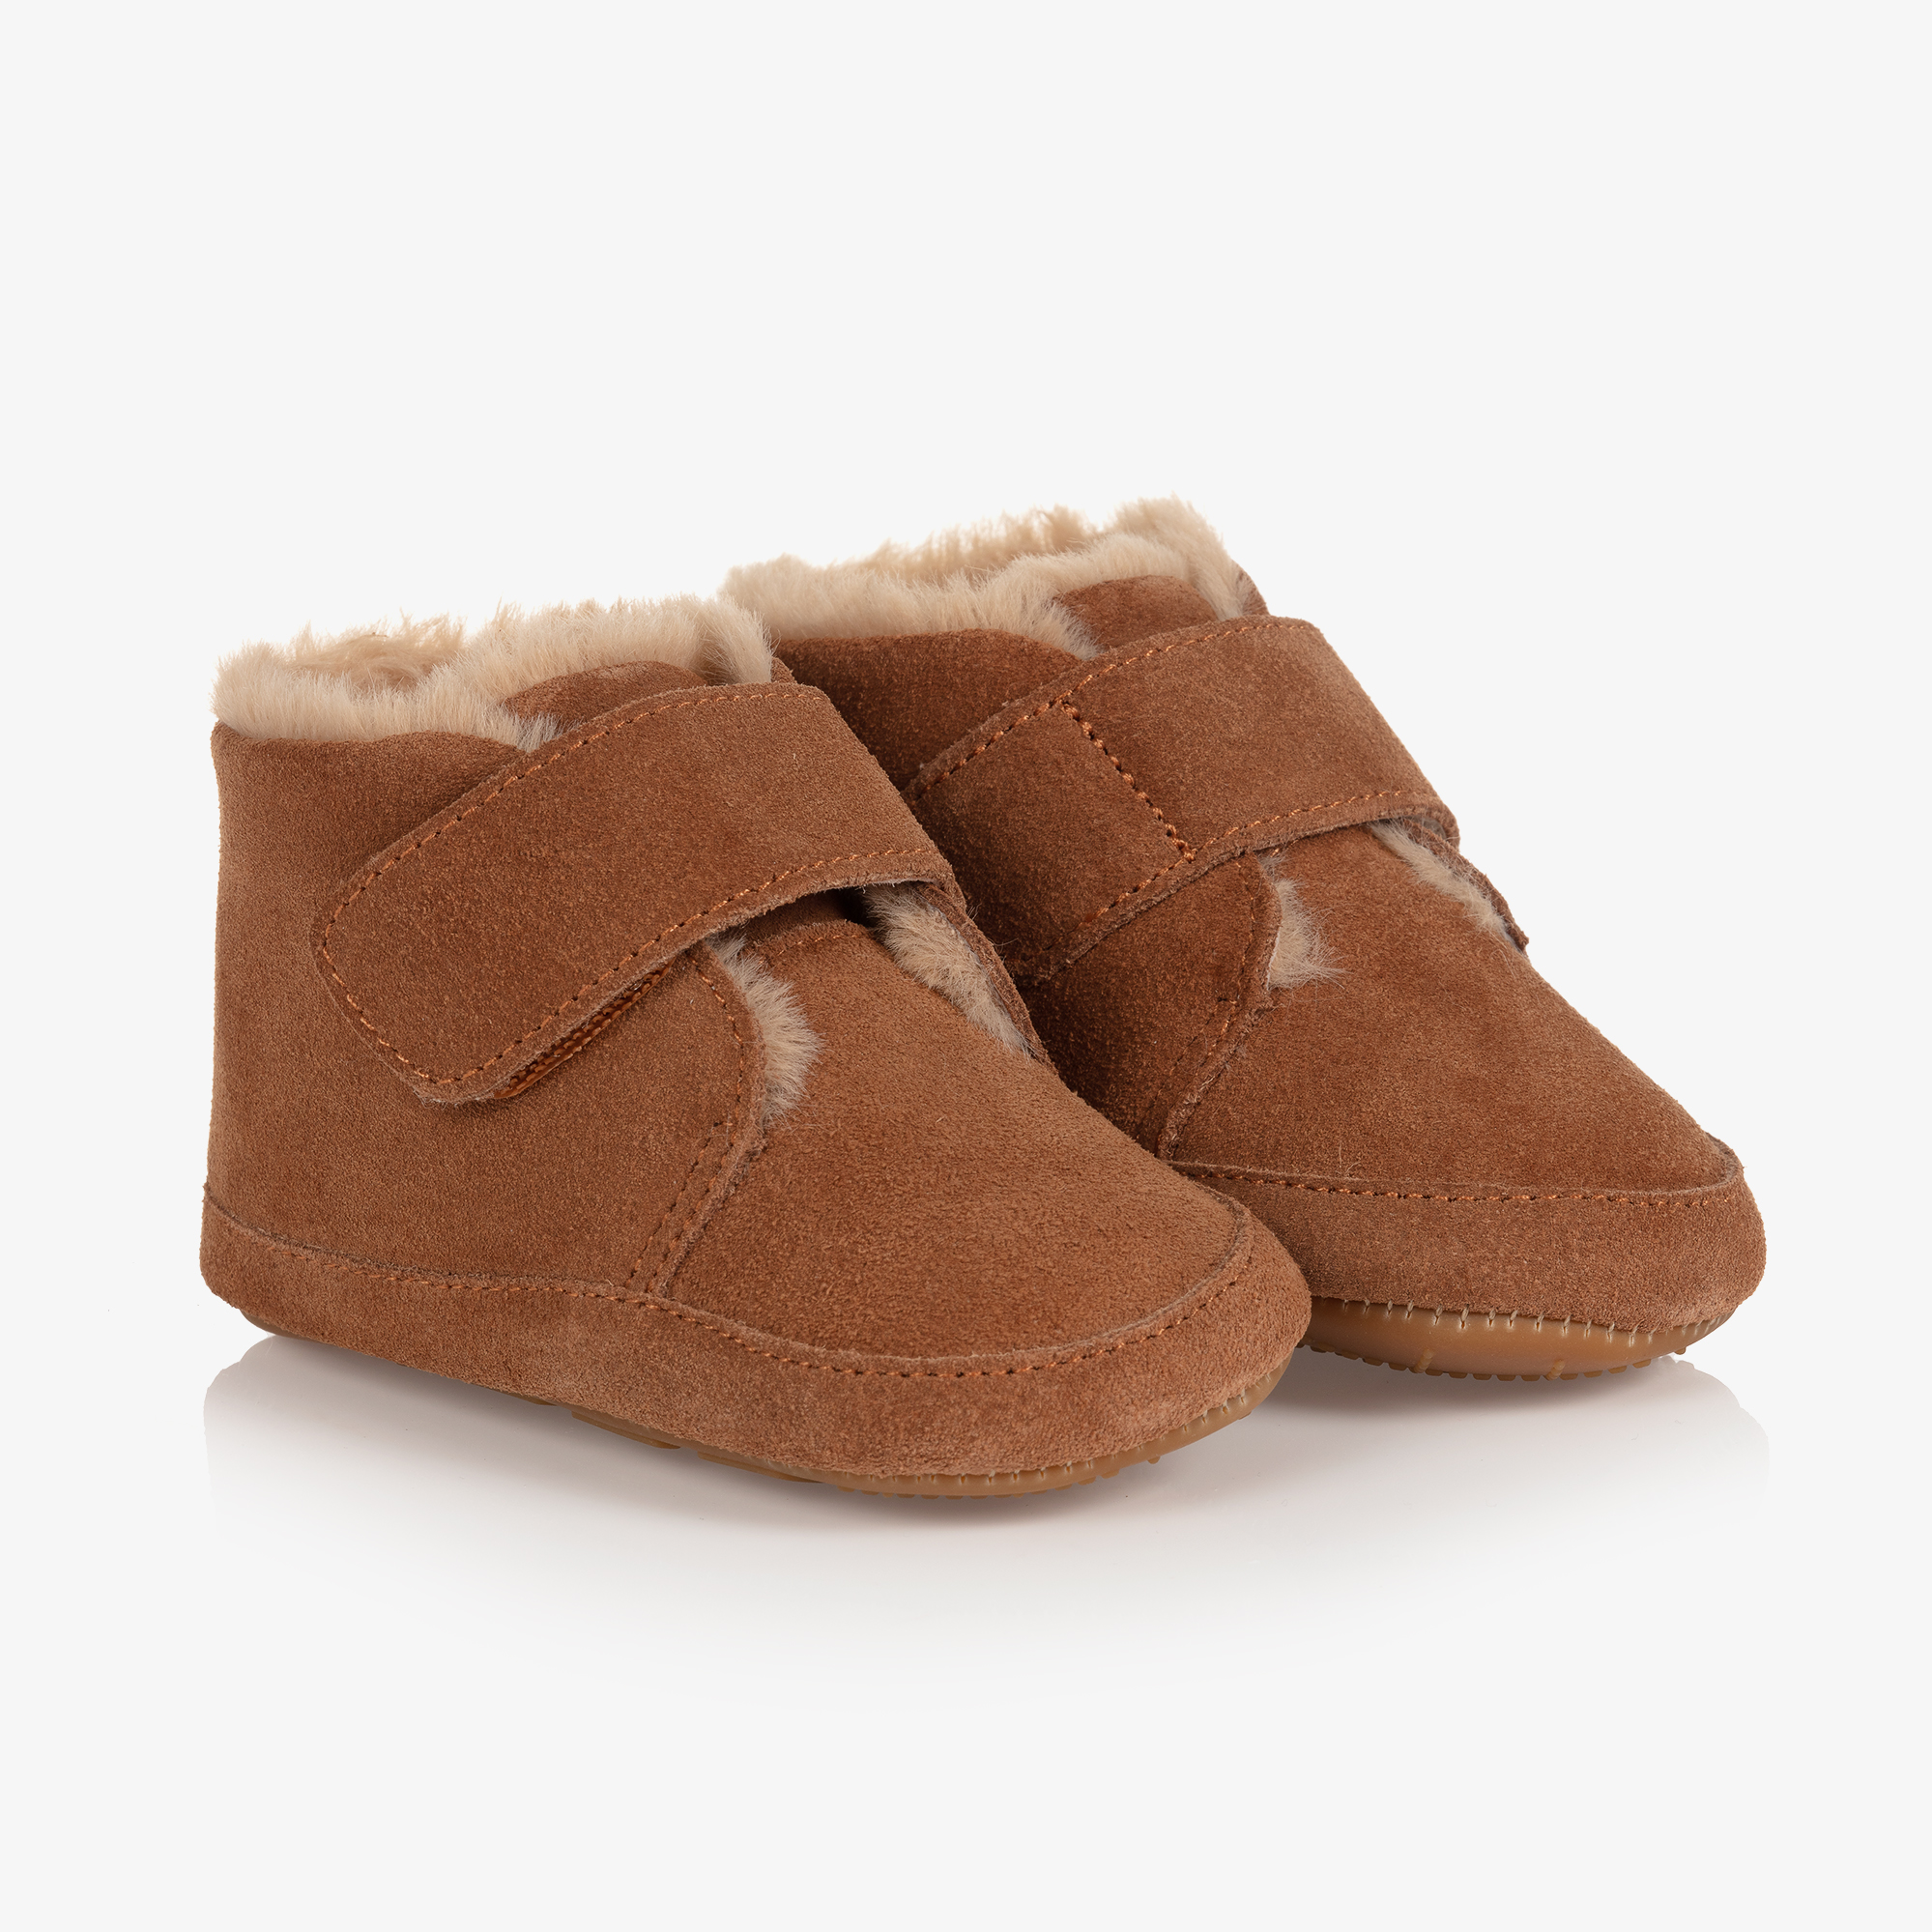 18-21 21-24 months Unisex faux fur warm winter boots in brown or beige 15-18 